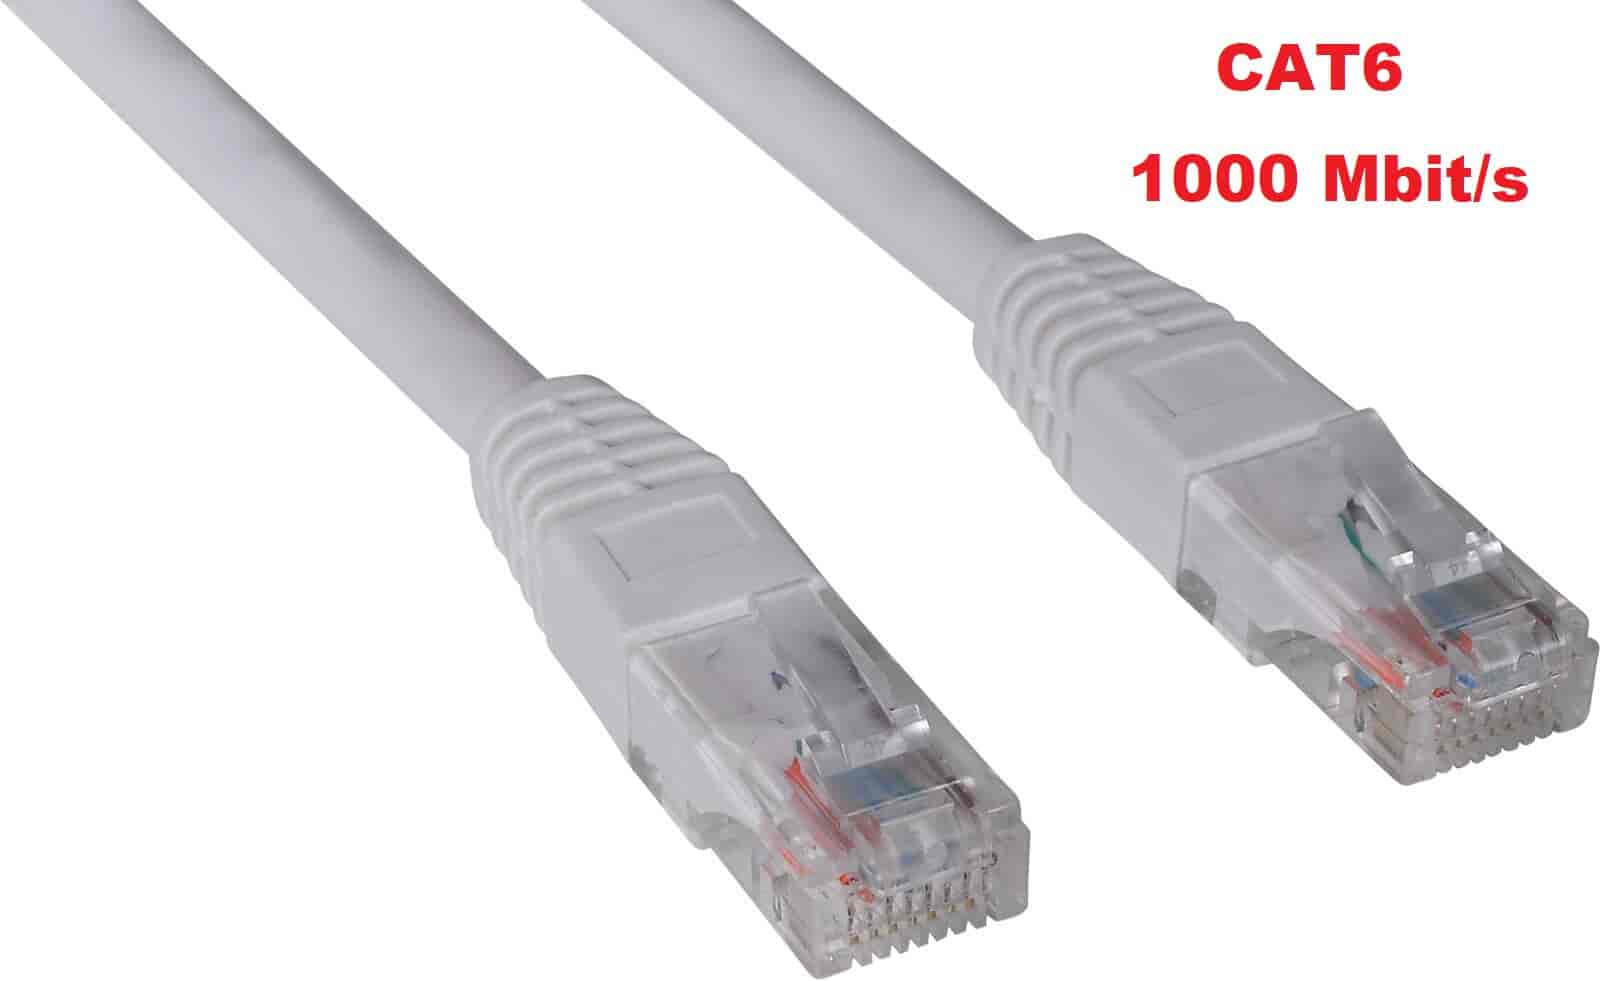 CAT6 Network cable UTP RJ45